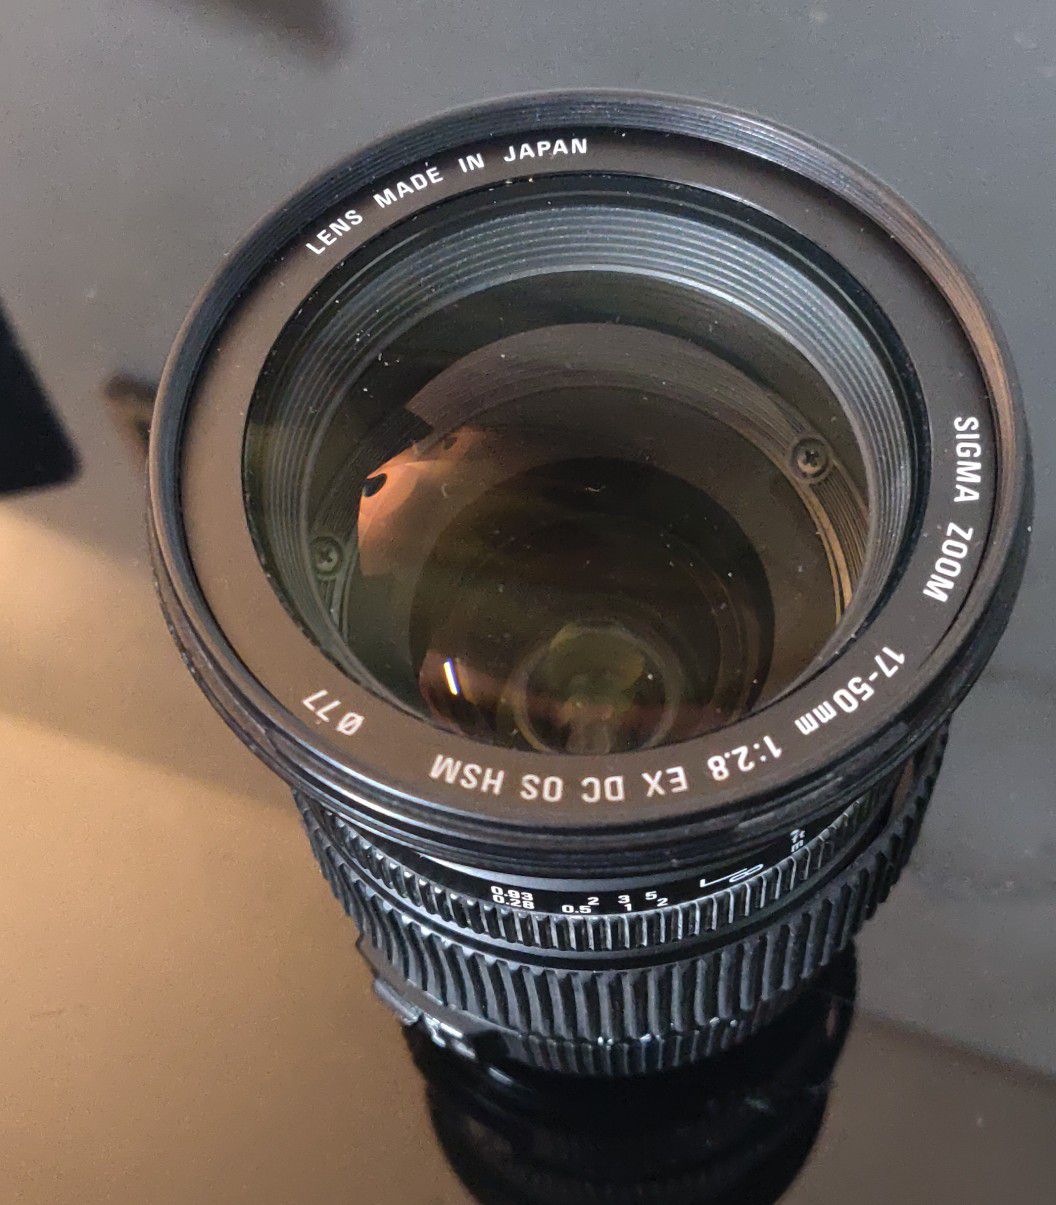 Sigma 17-50mm lens (needs repairs)